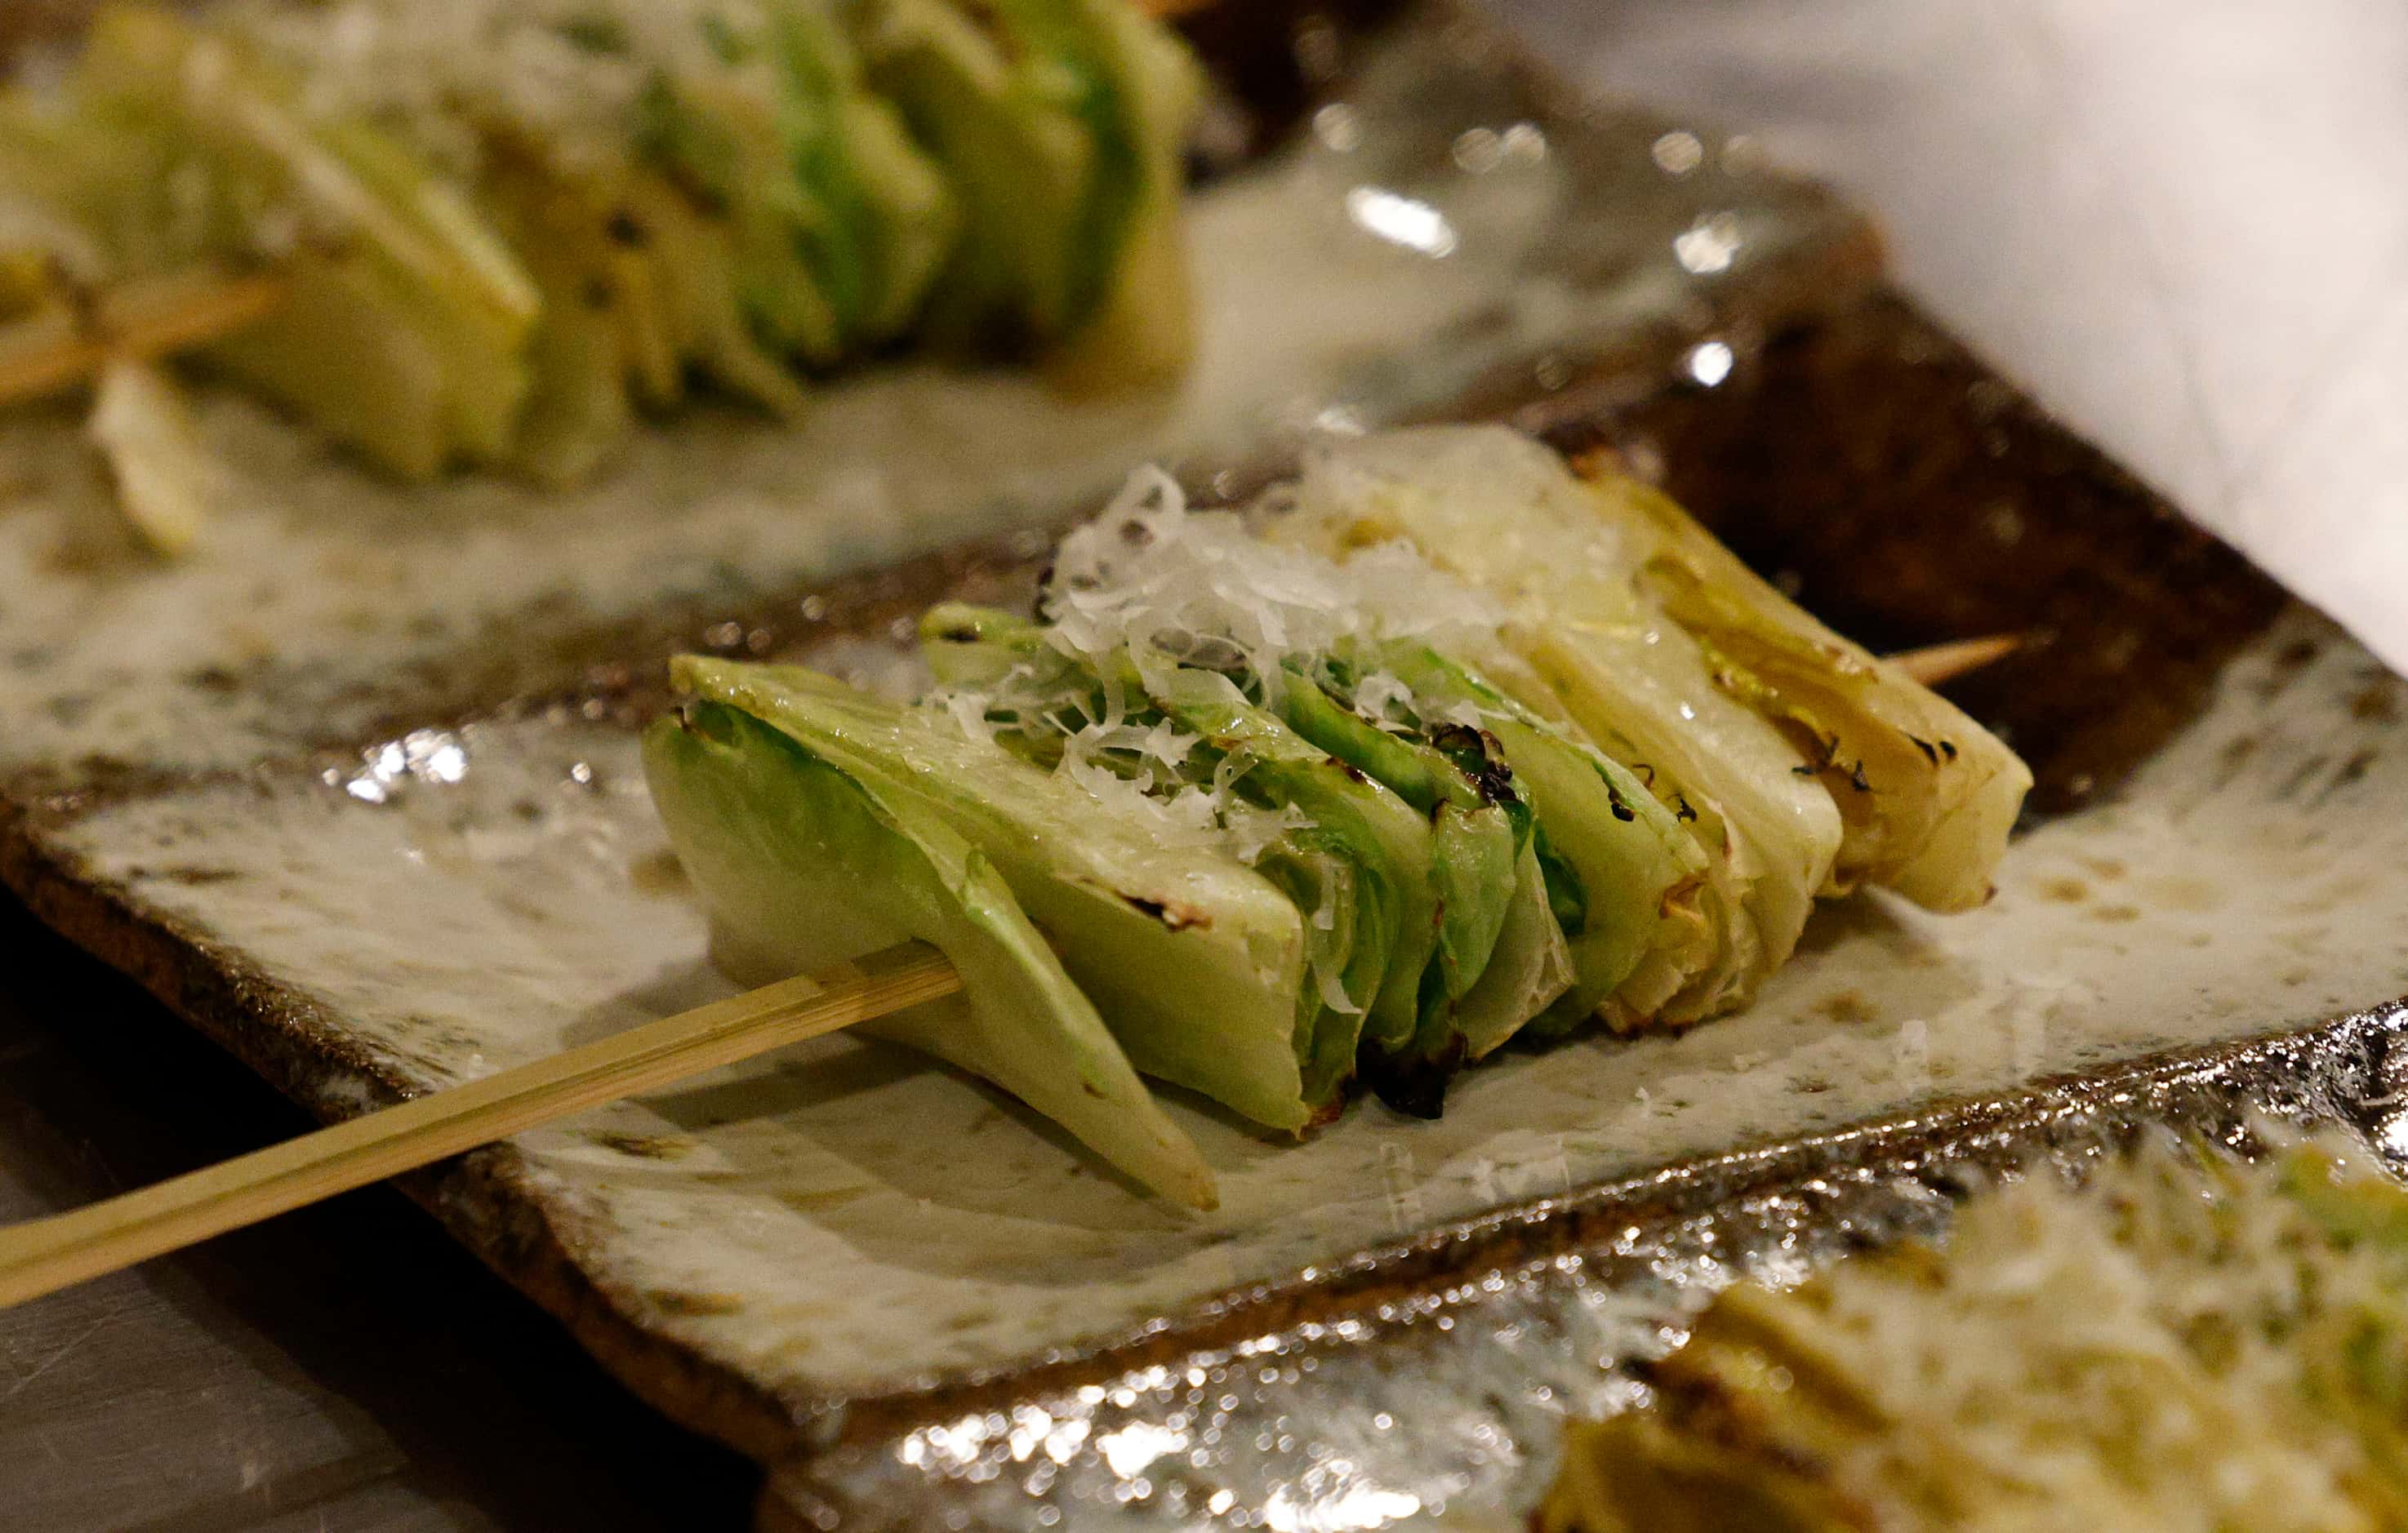 Romaine Heart Kushiyaki Salad is one of the grilled vegetable courses at Chef Masayuki...